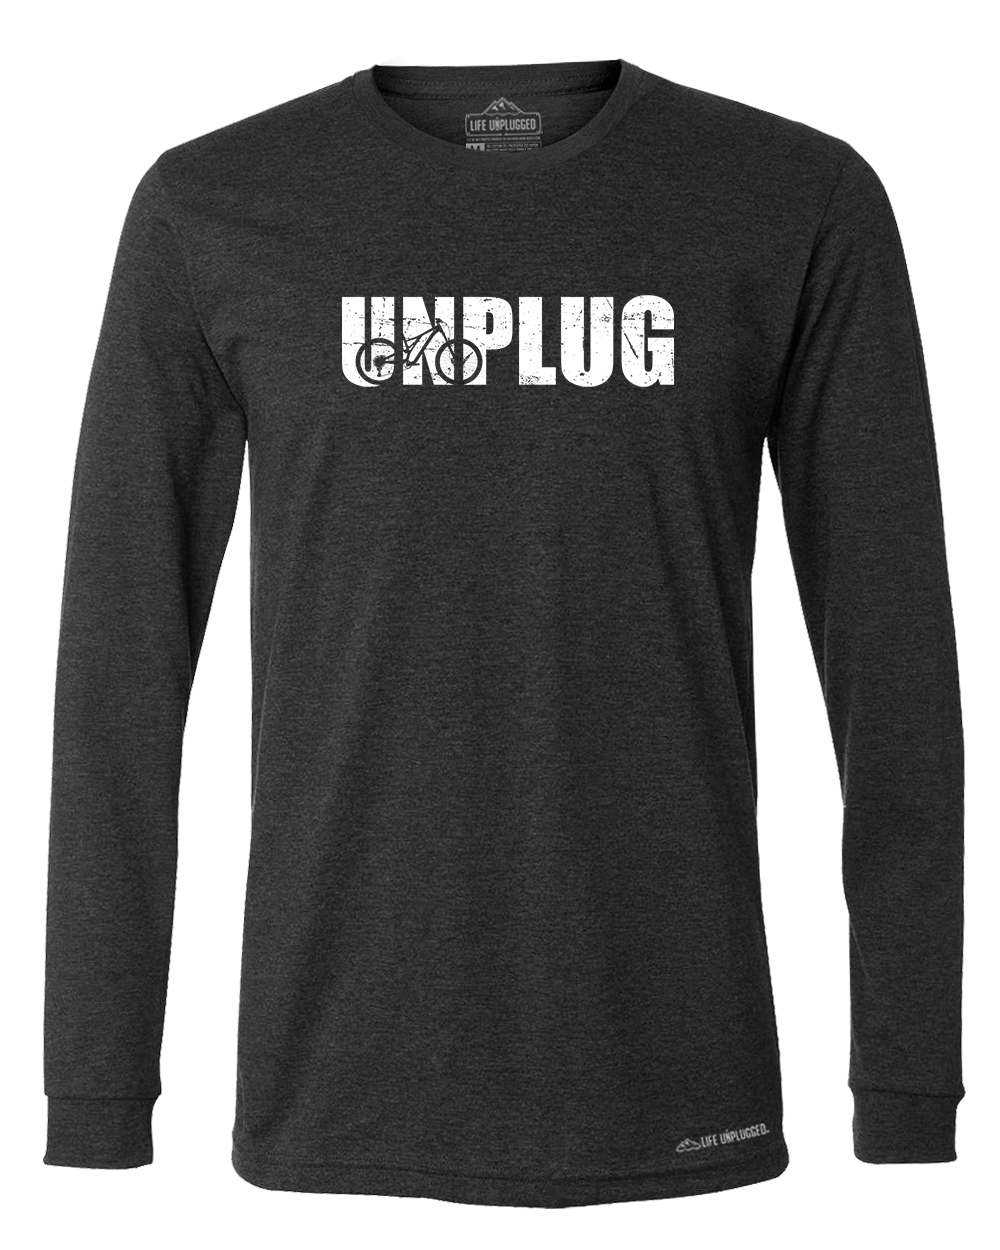 Unplug Mountain Bike Silhouette Premium Polyblend Long Sleeve T-Shirt